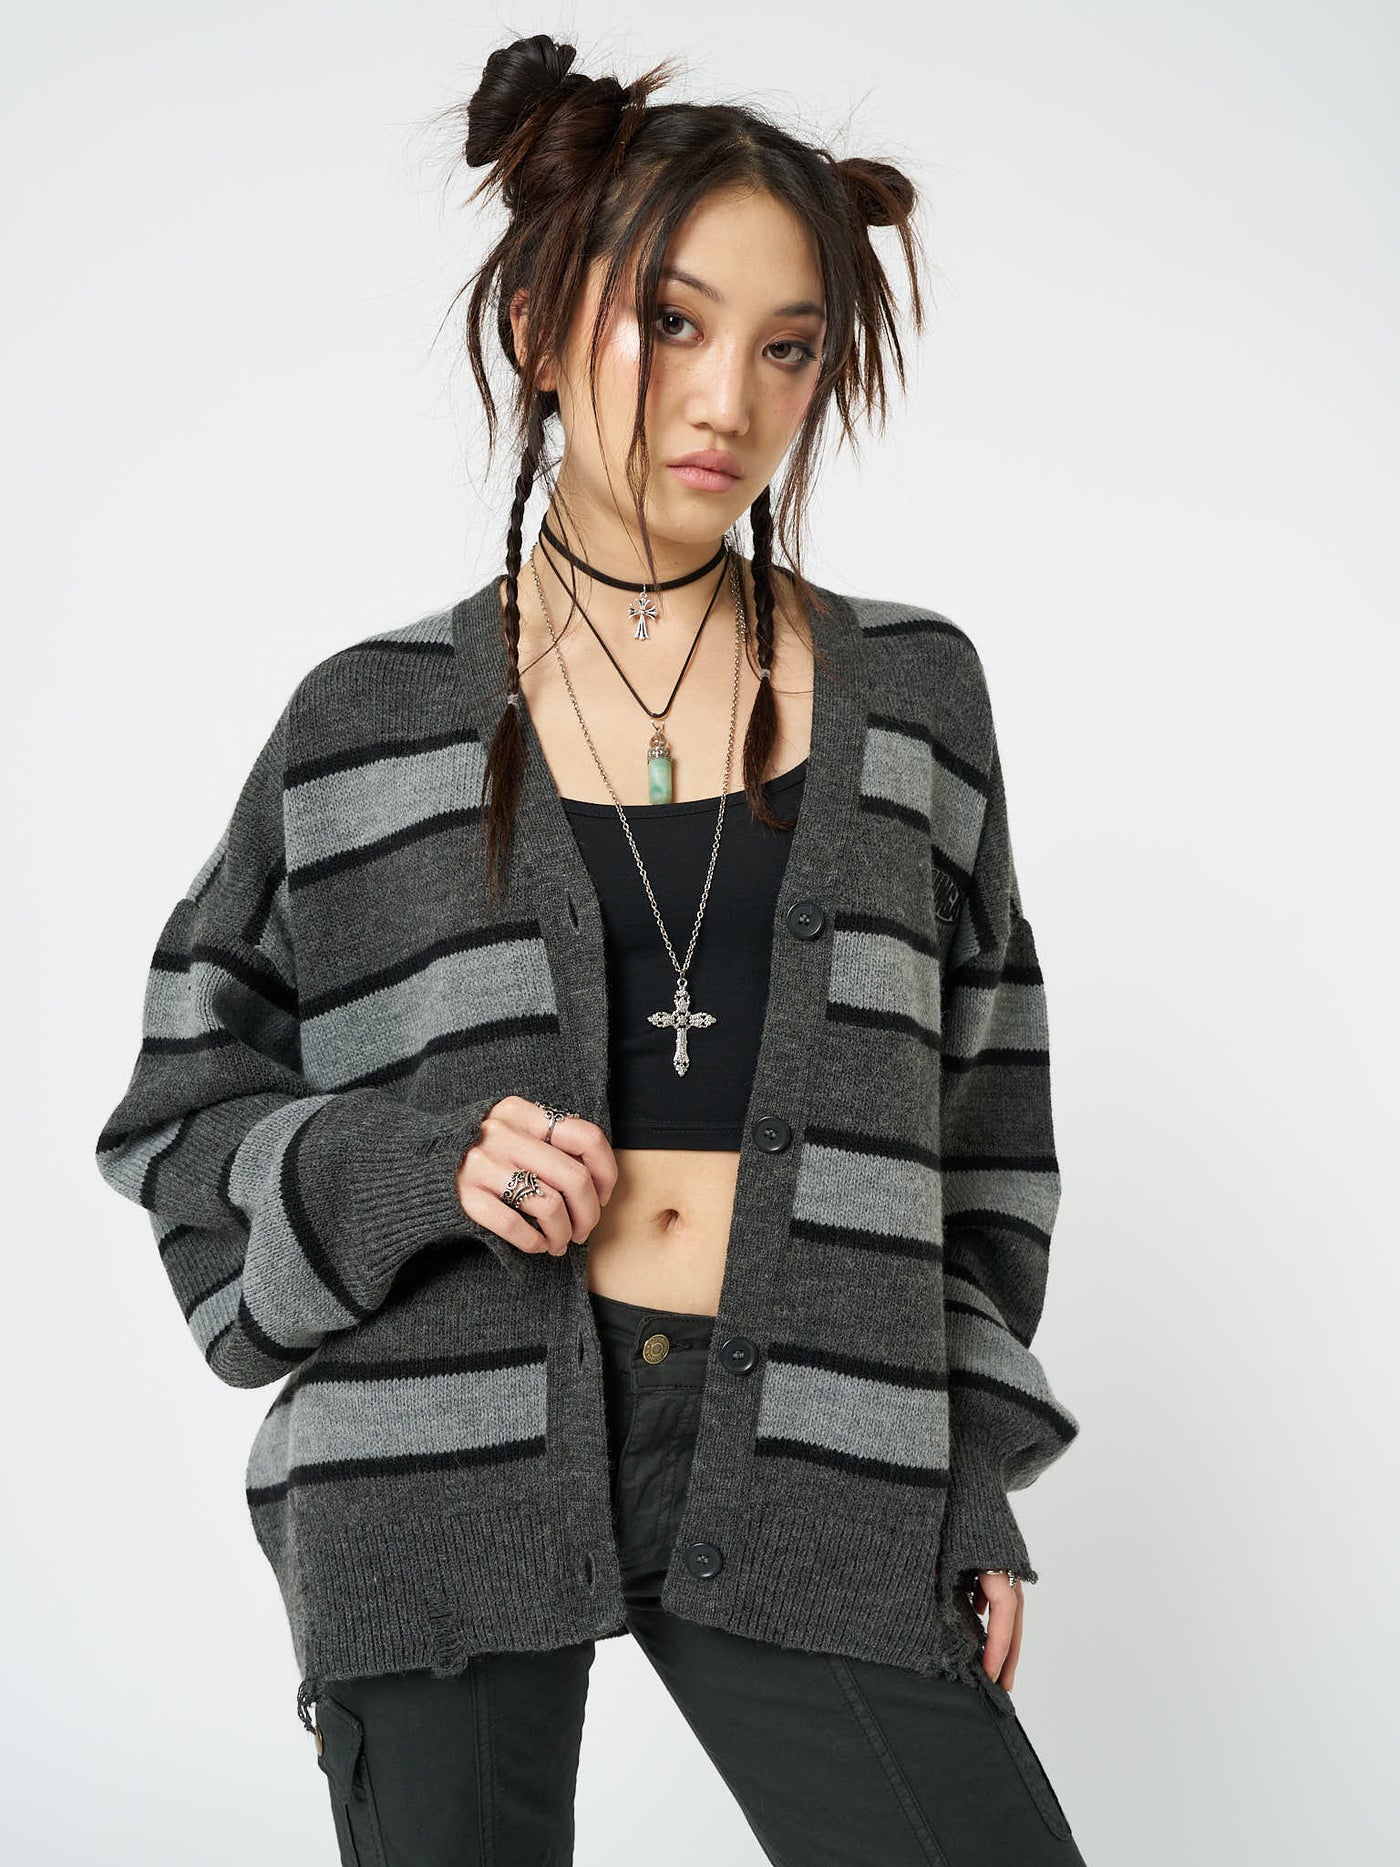 Neesa Grey & Black Stripe Knit Cardigan - Minga London